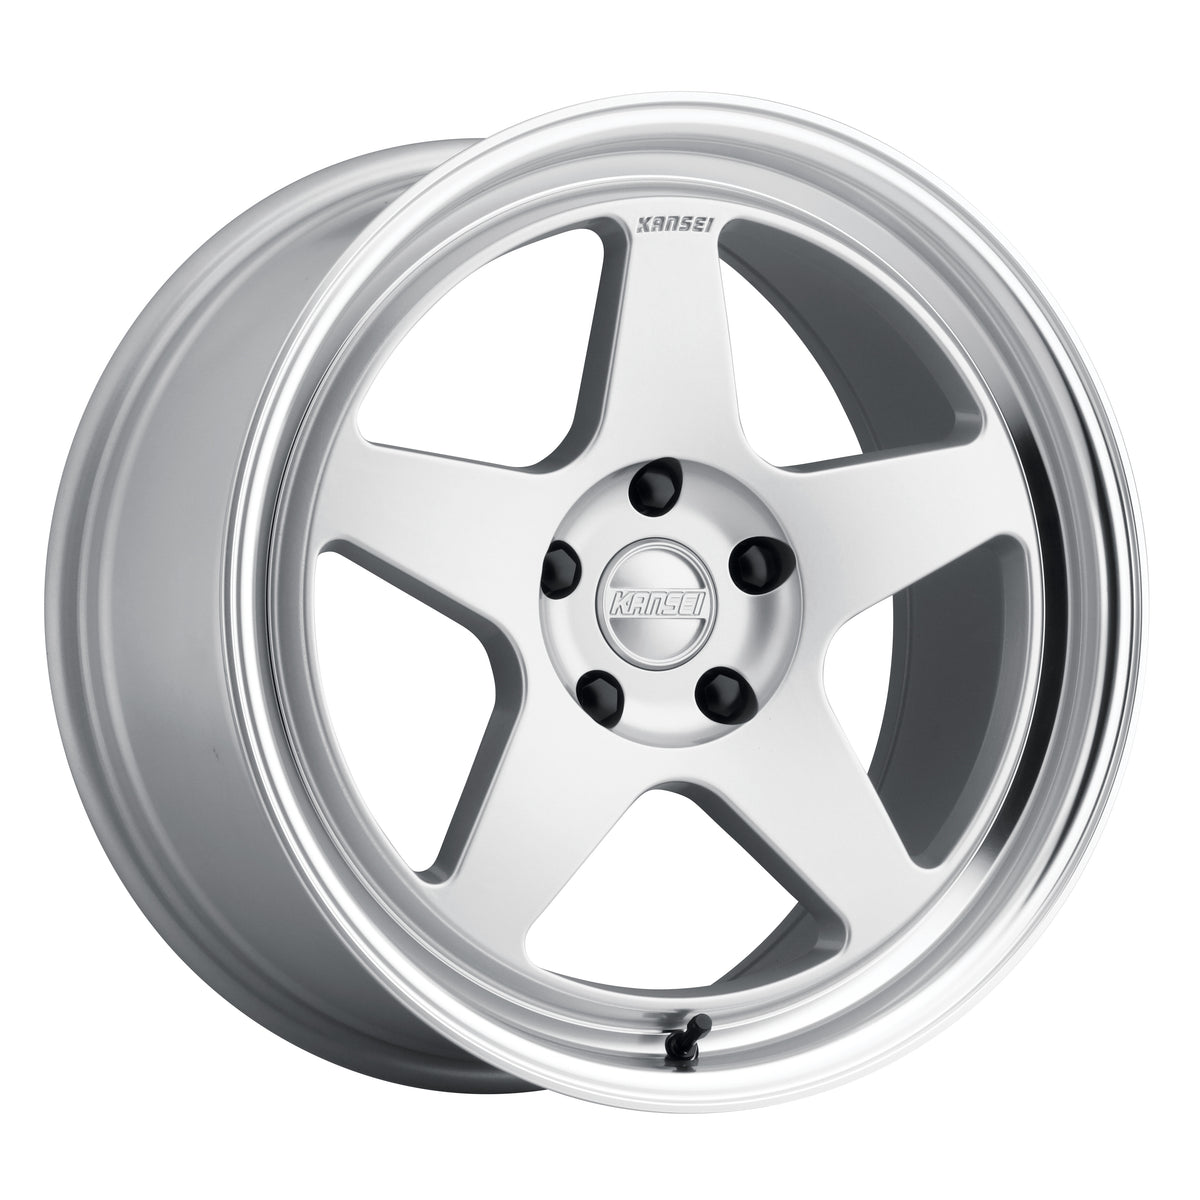 K12H KNP Wheel, Size: 18" x 8.50", Bolt Pattern: 5 x 114 mm, Backspace: 6.13" [Finish: Hyper Silver]